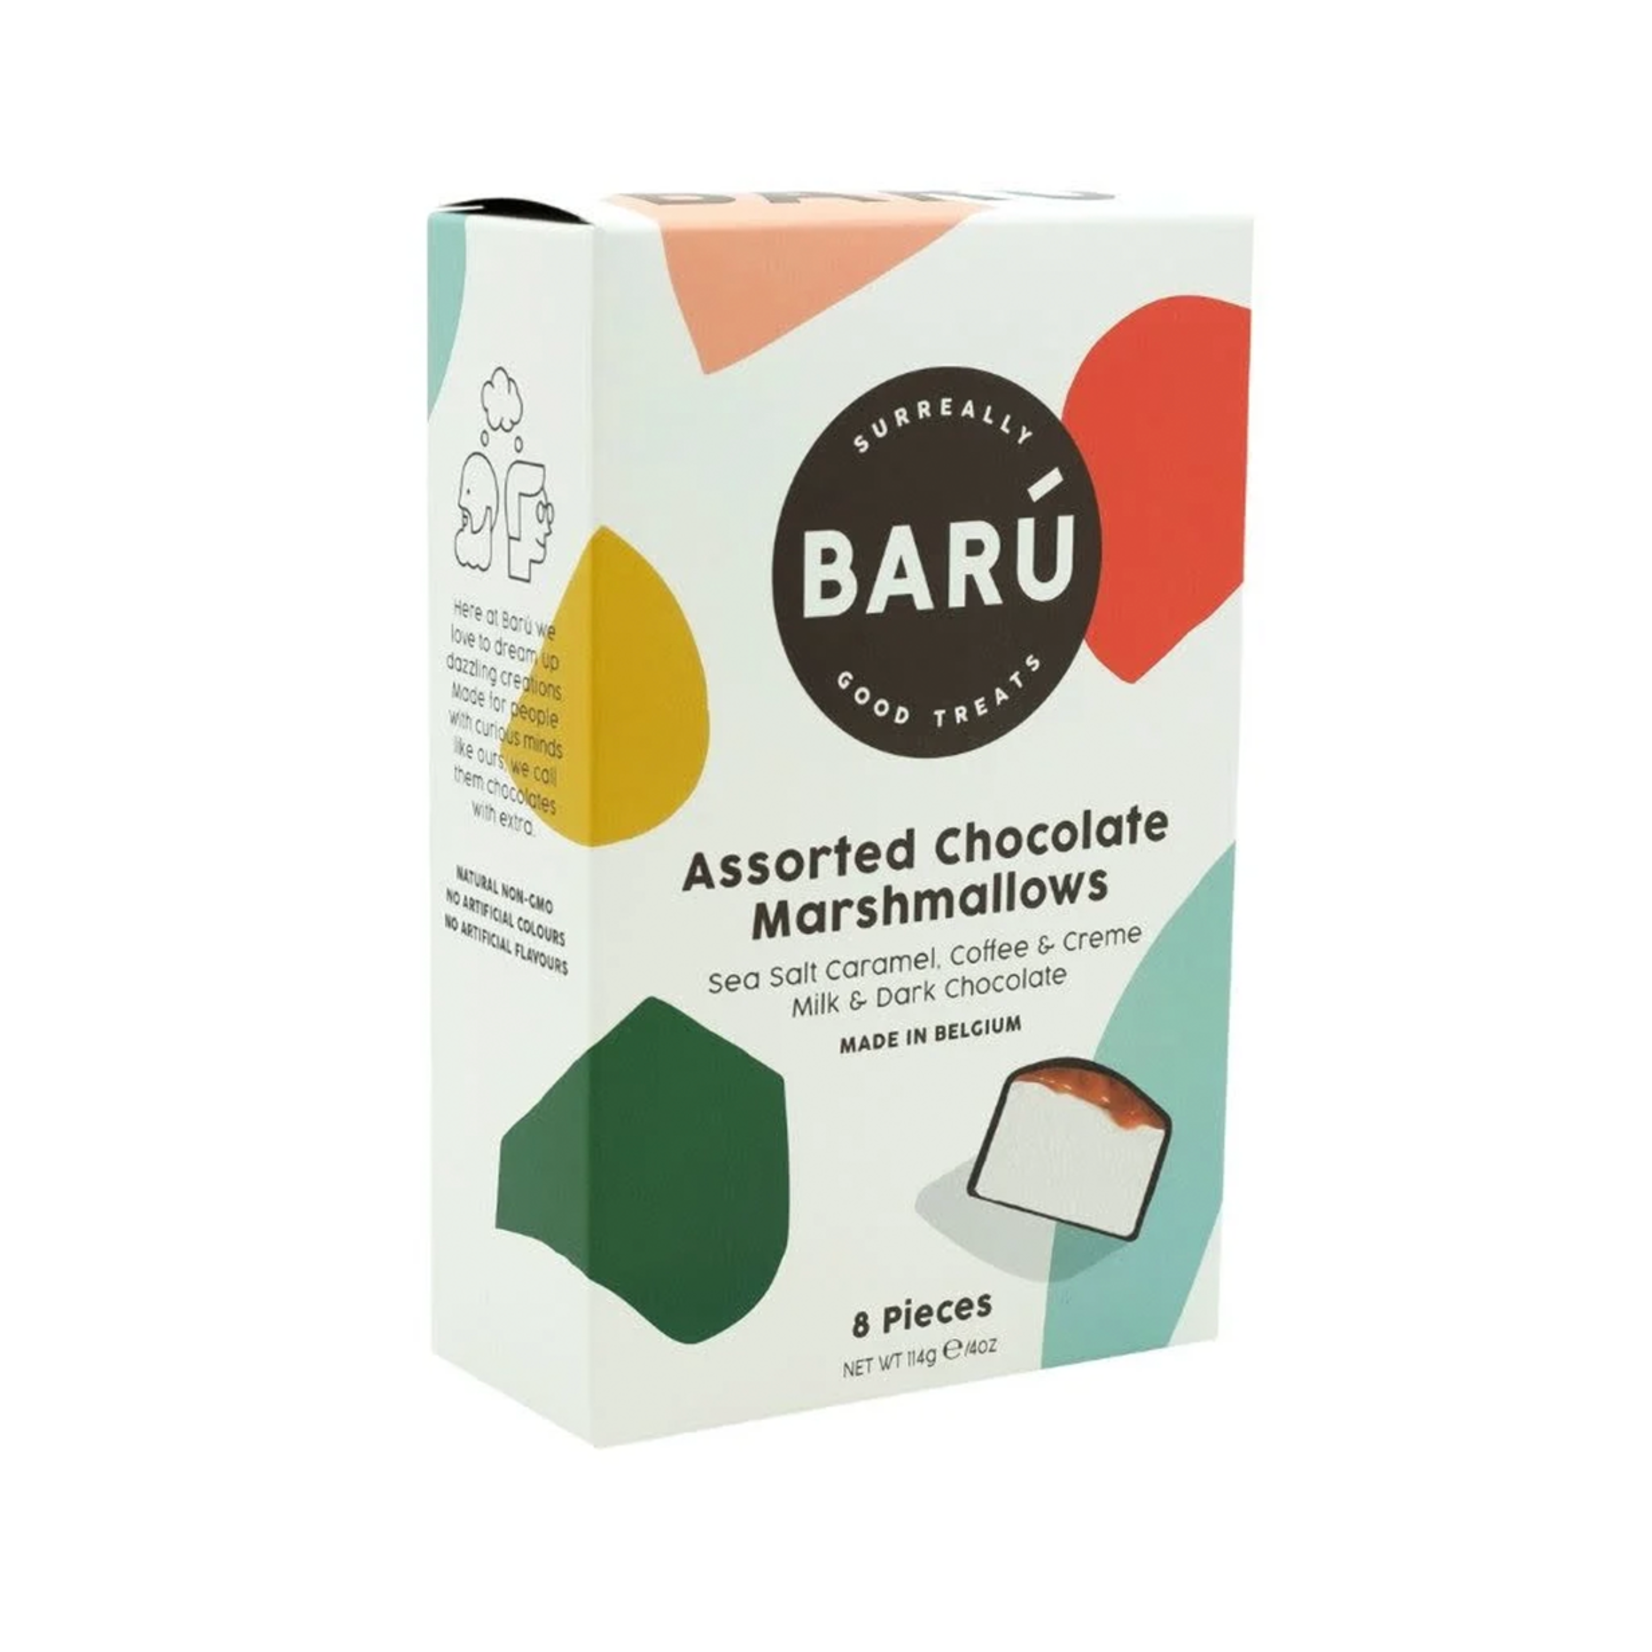 Barú Baru marshmallows mix pack